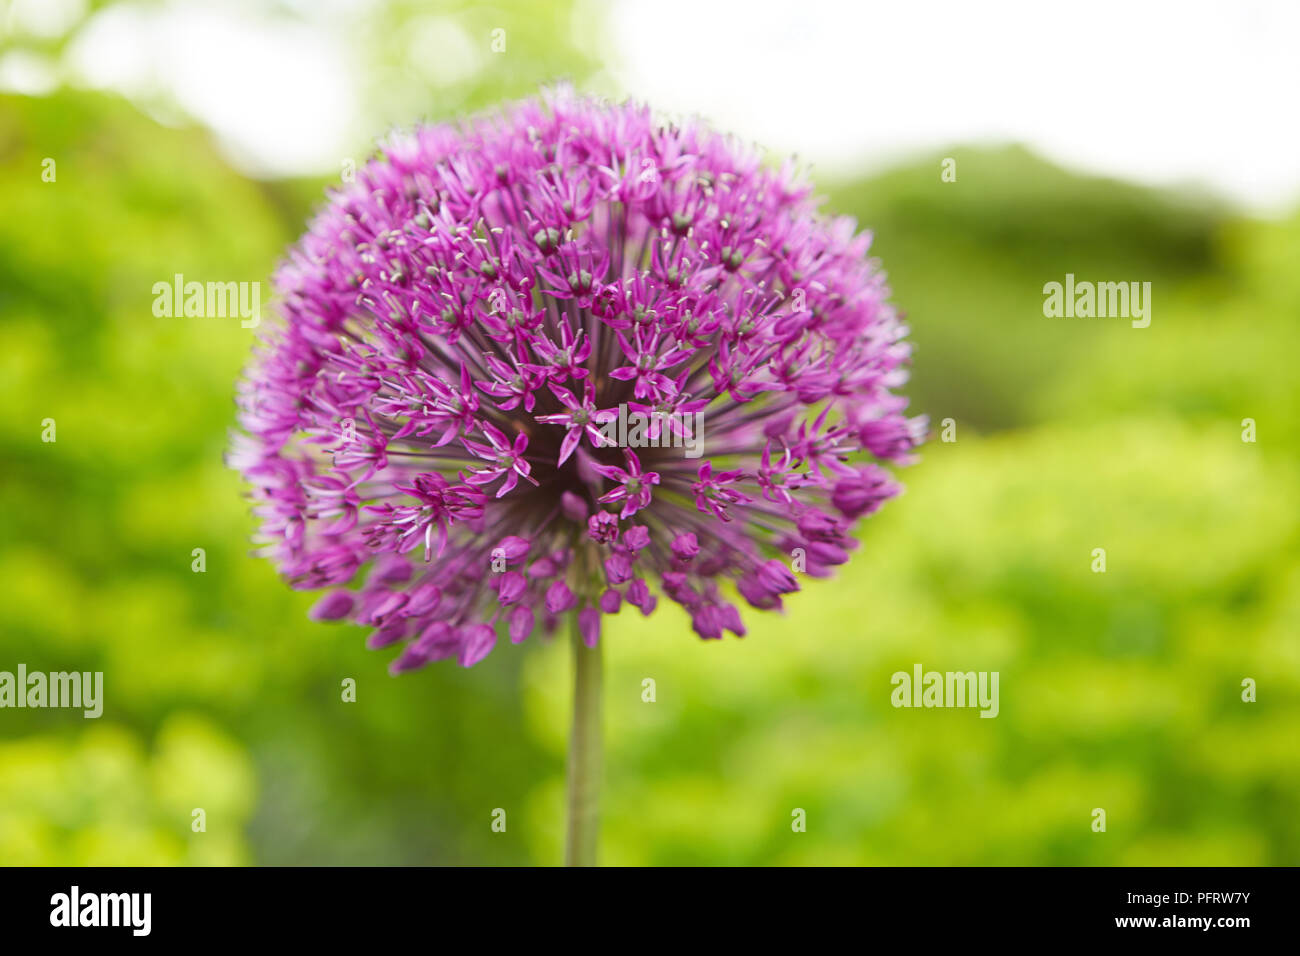 Rosa Allium flowerhead Stockfoto